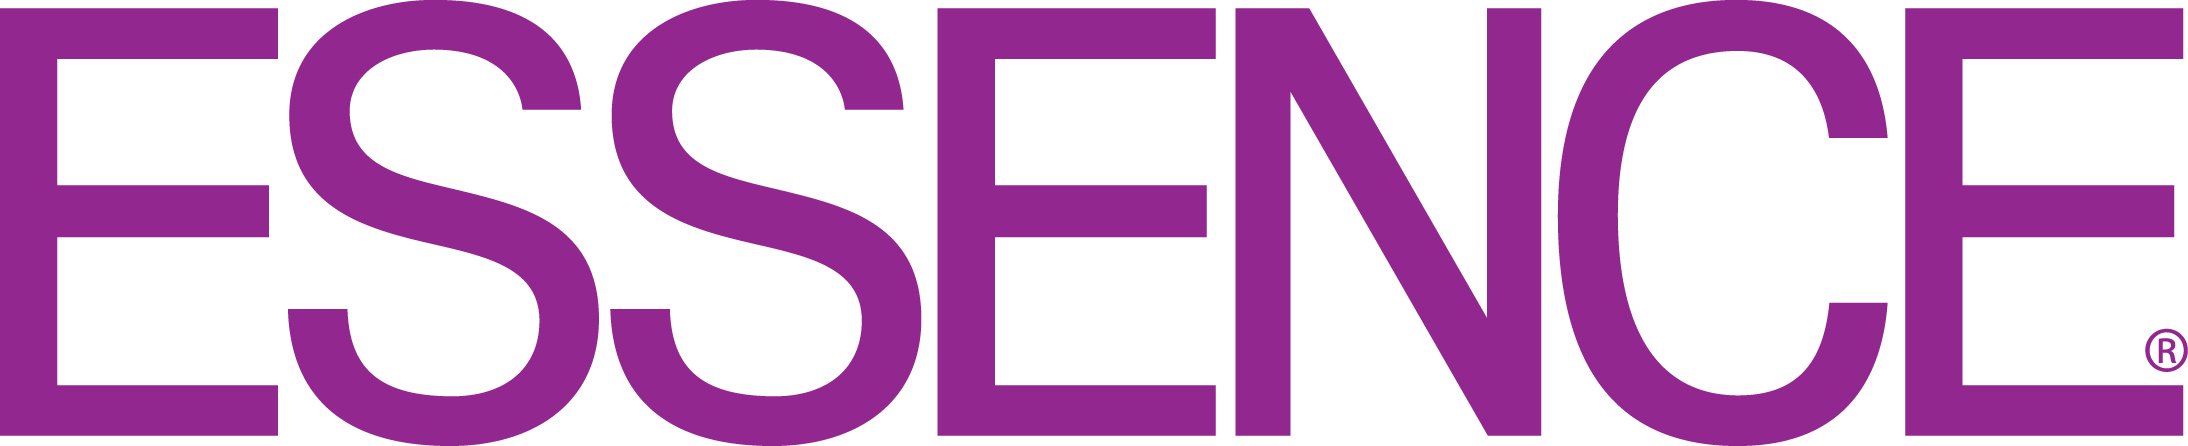 essence logo.jpeg